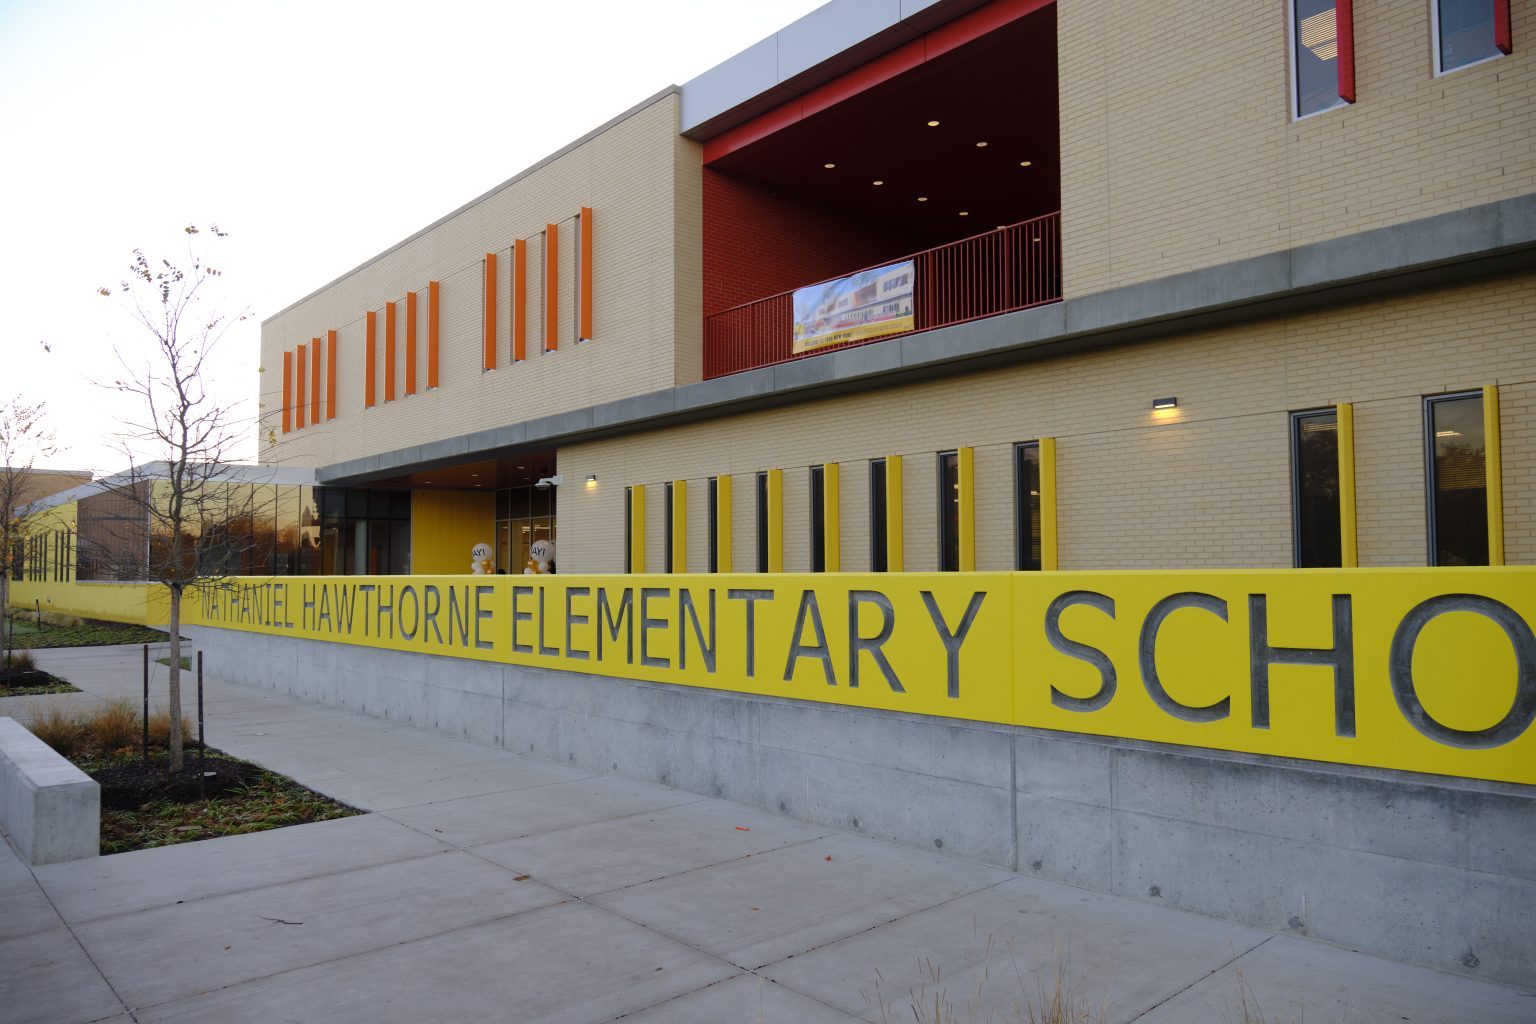 Nathaniel Hawthorne Elementary School Receives Design Award for New Building